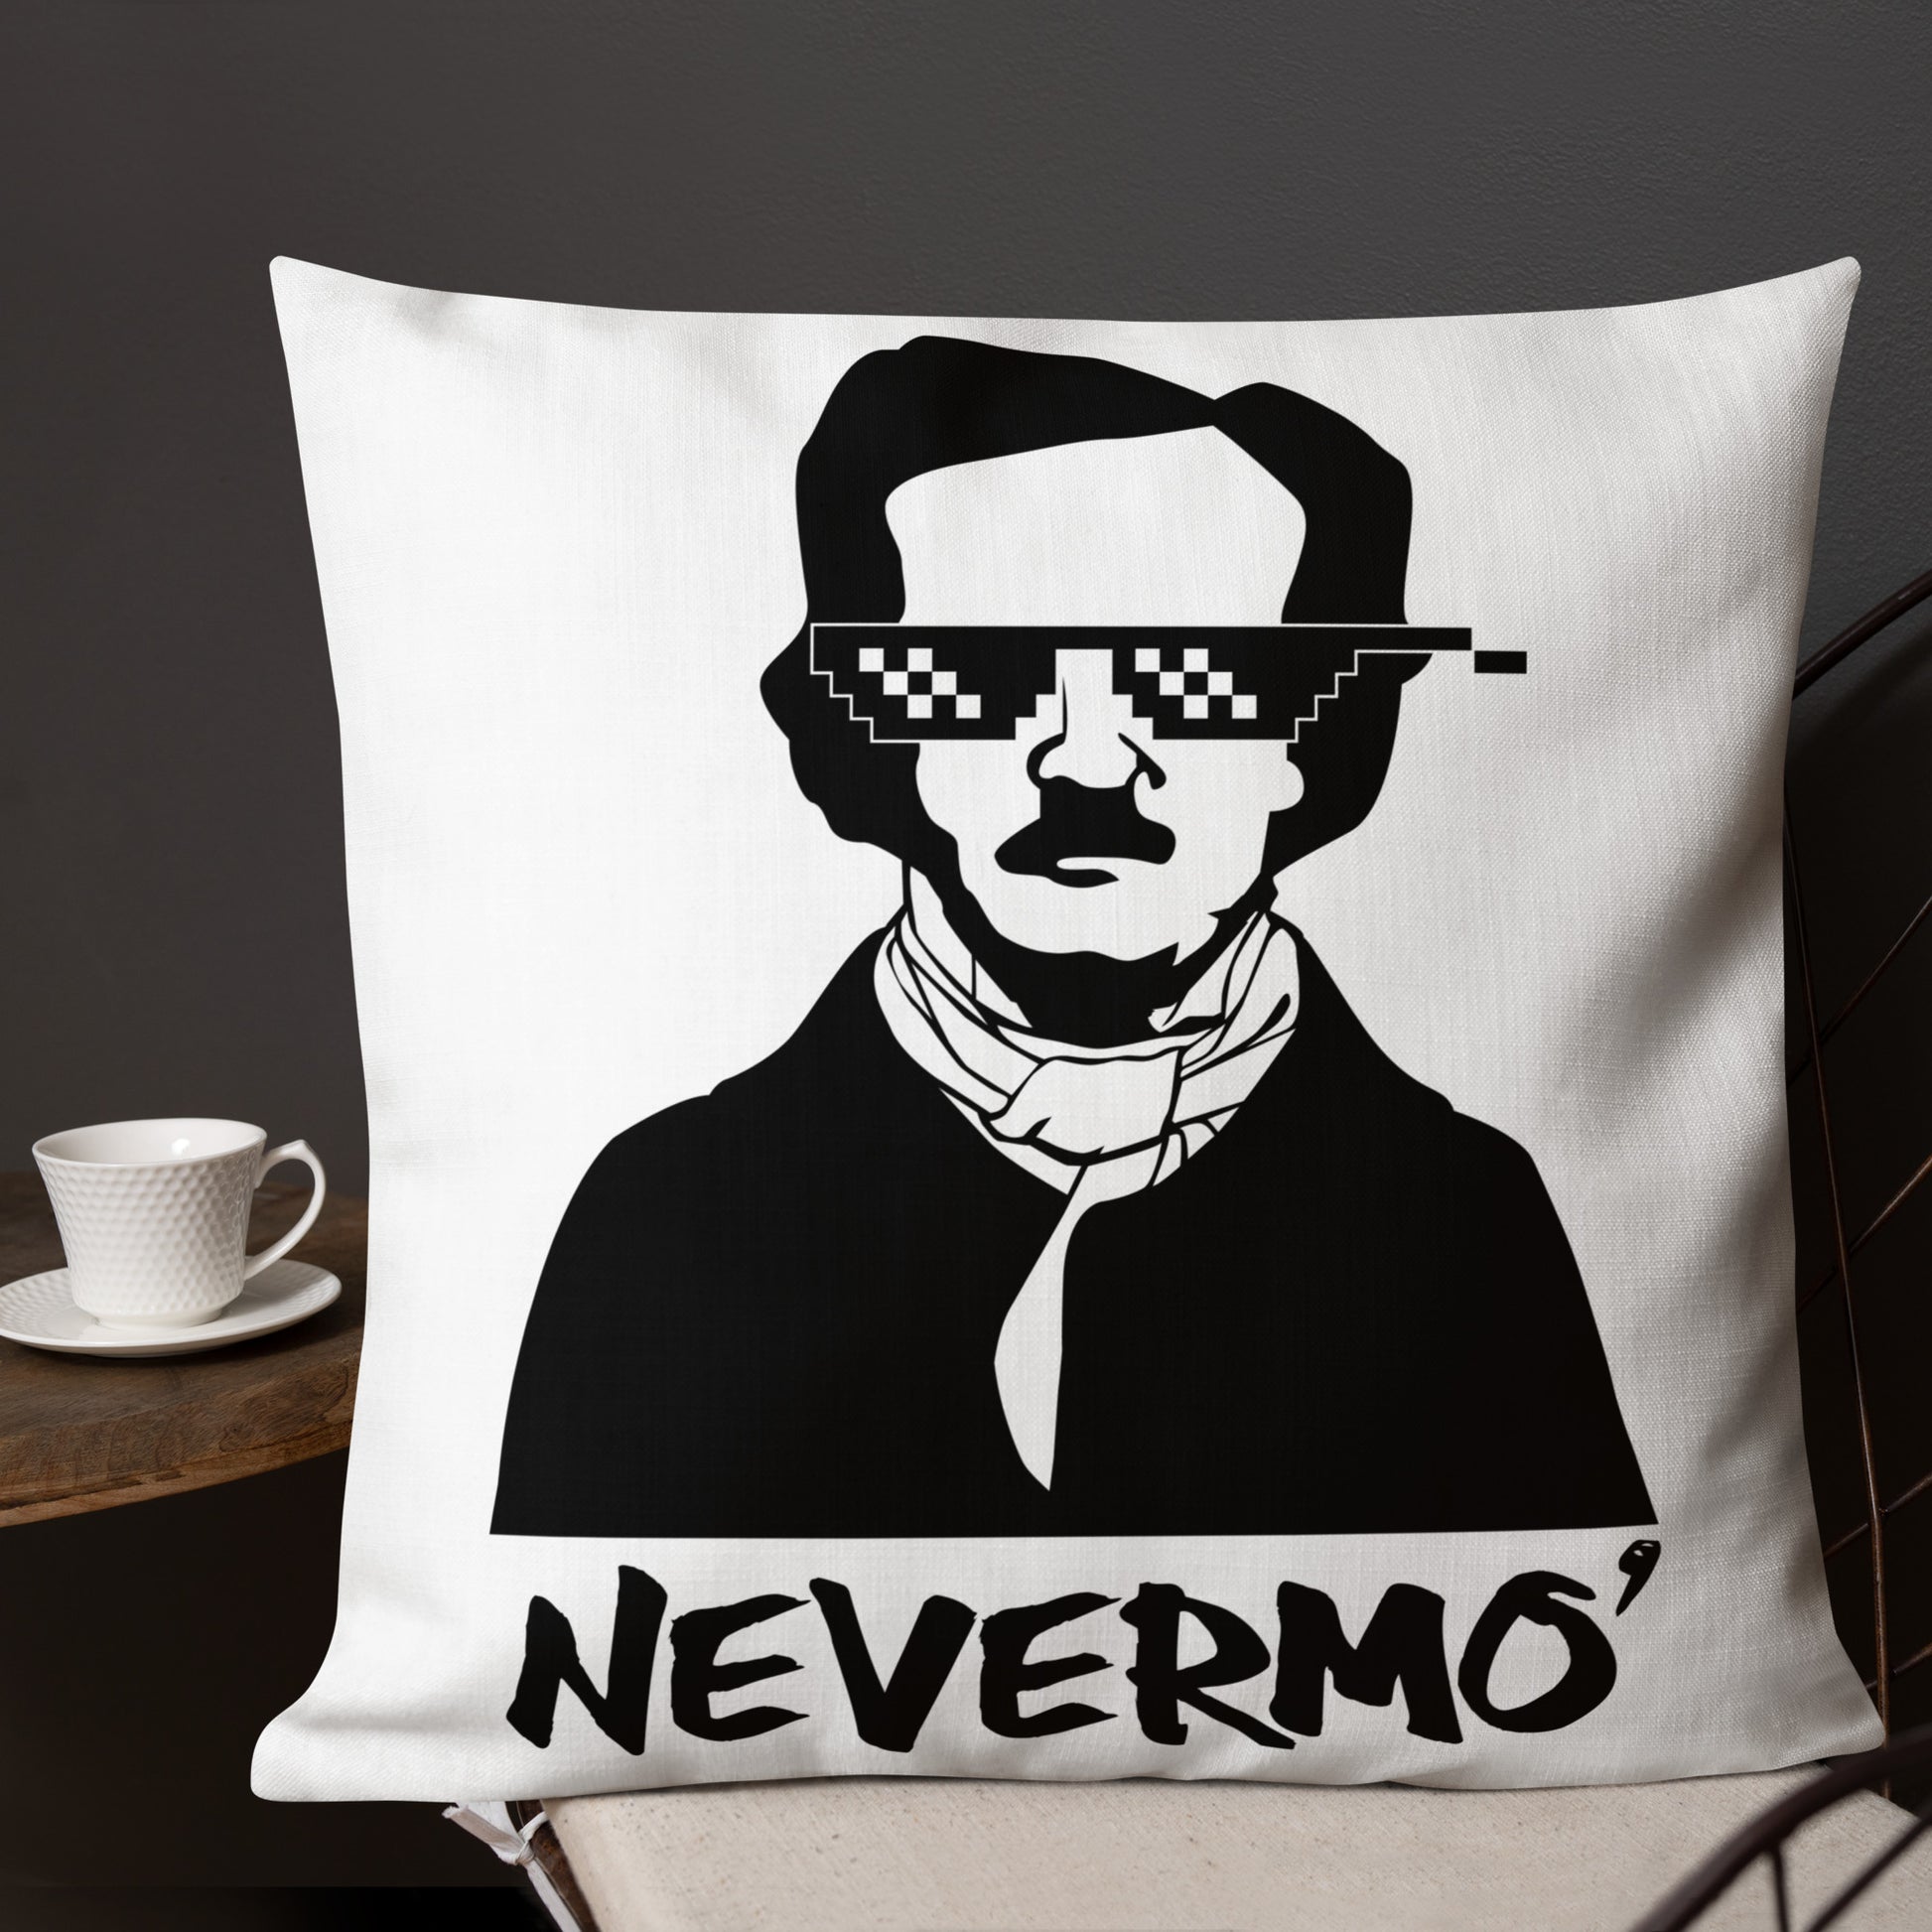 Edgar Allan Poe "Nevermo" Premium Pillow - 22x22 Back